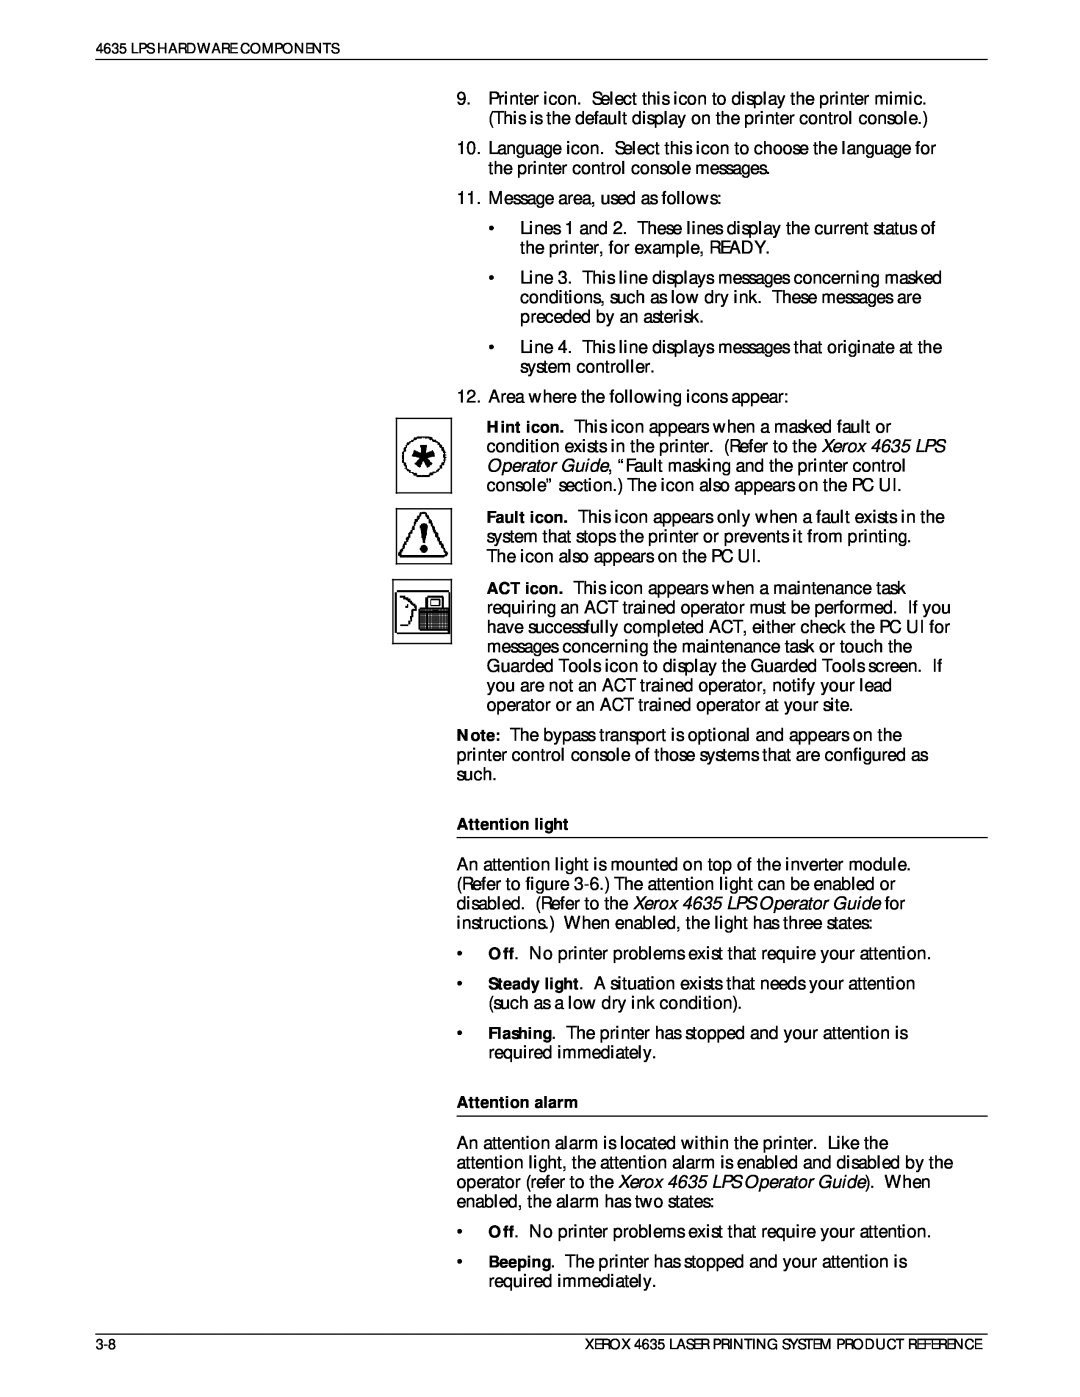 Xerox 721P83071 manual Attention light, Attention alarm 